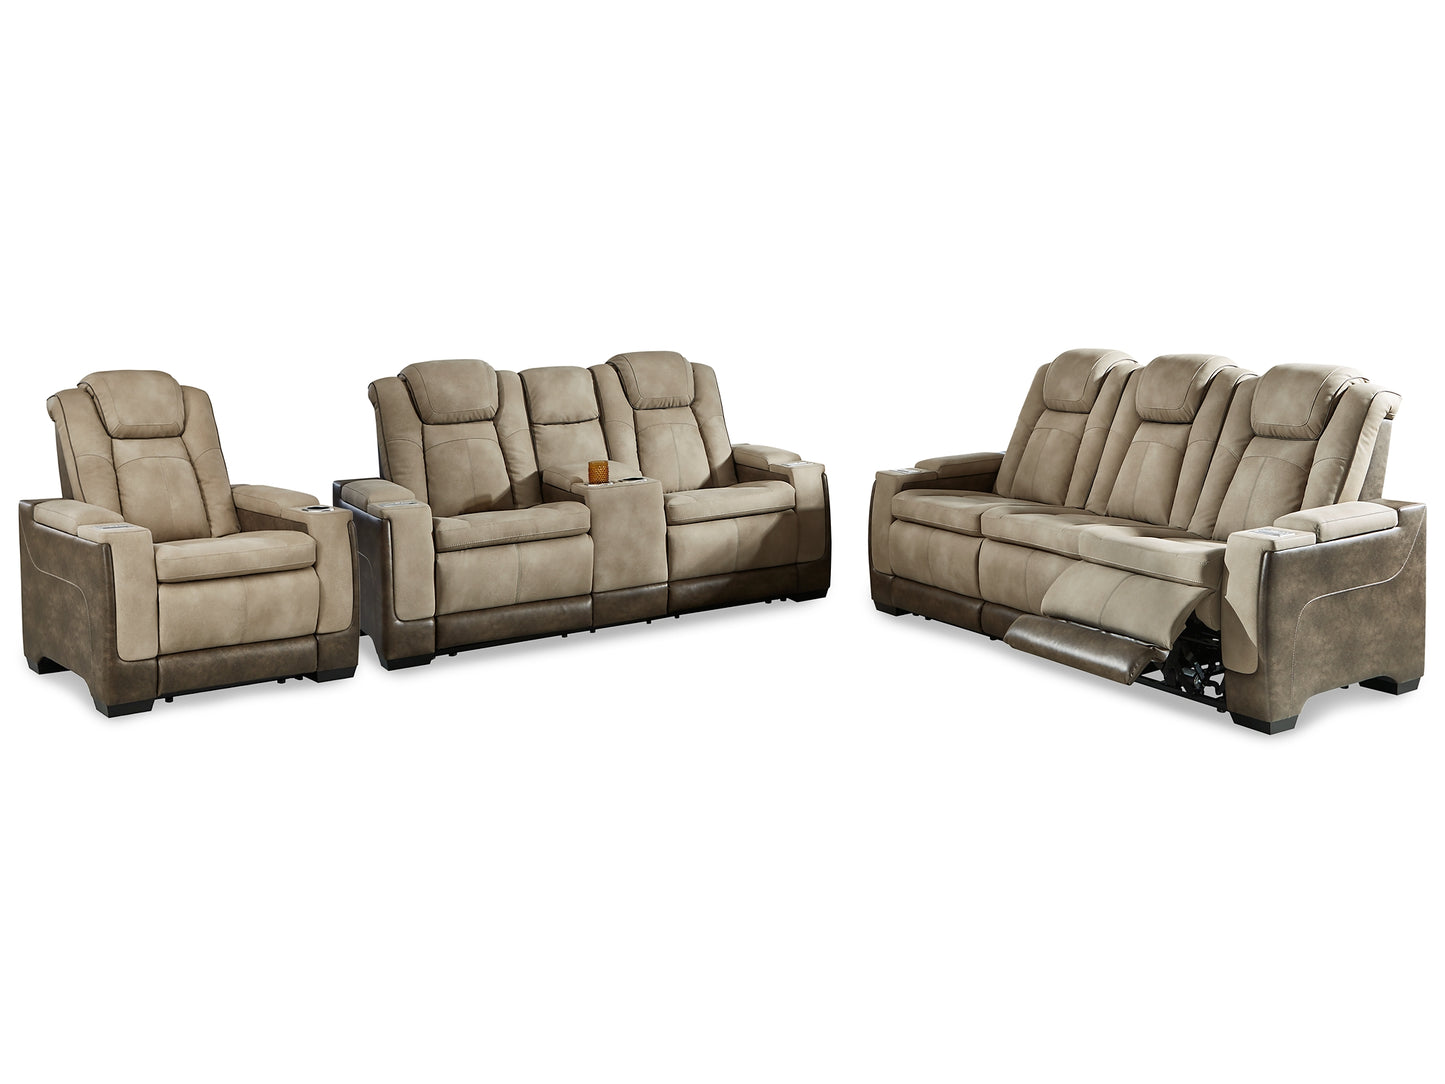 Next-Gen DuraPella Sofa, Loveseat and Recliner JB's Furniture Furniture, Bedroom, Accessories